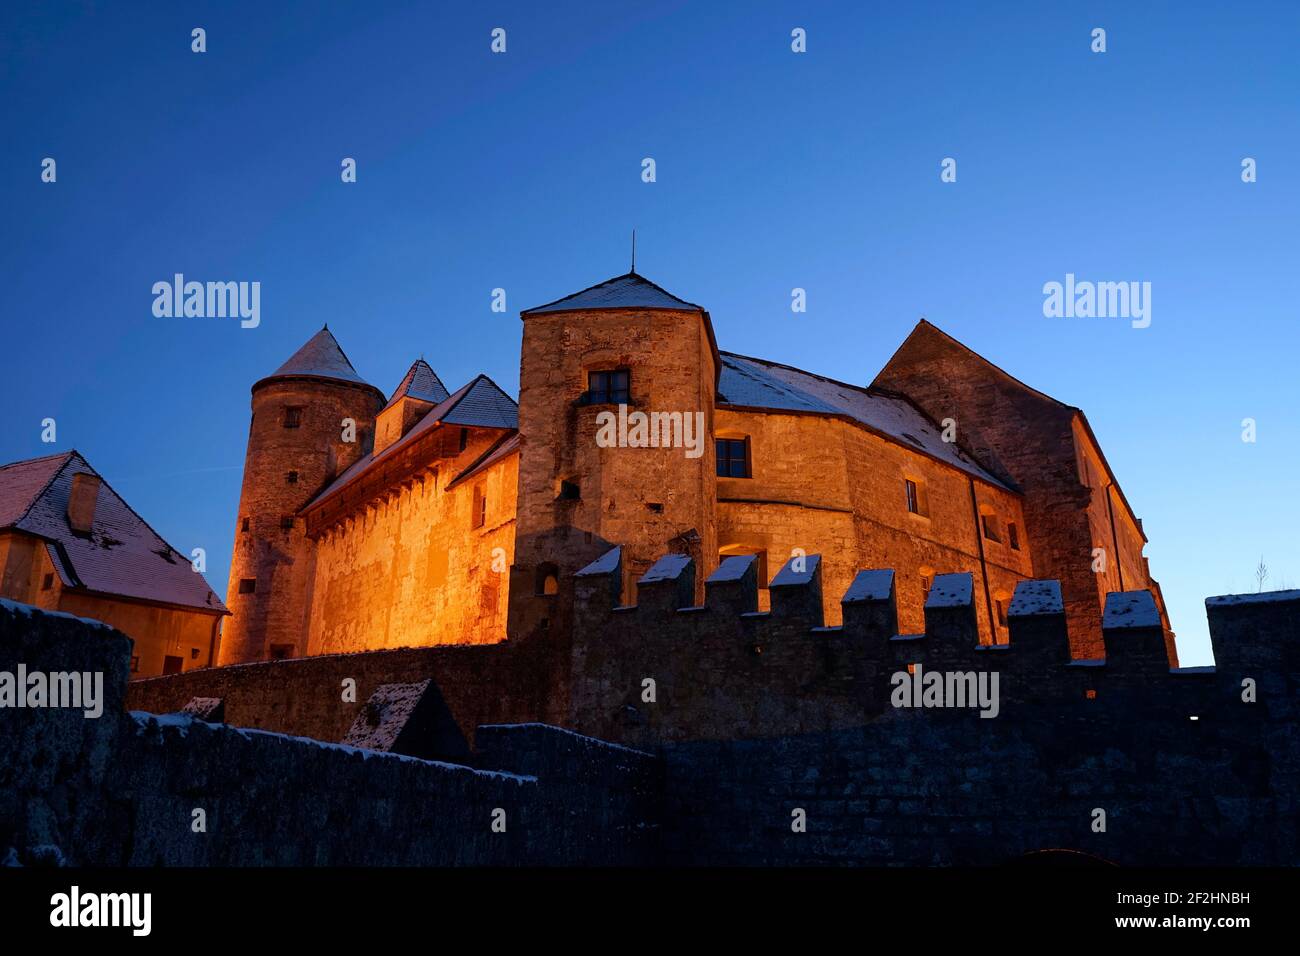 Alemania, Baviera, Alta Baviera, Altötting district, Burghausen, castillo, castillo principal, por la noche, iluminado Foto de stock